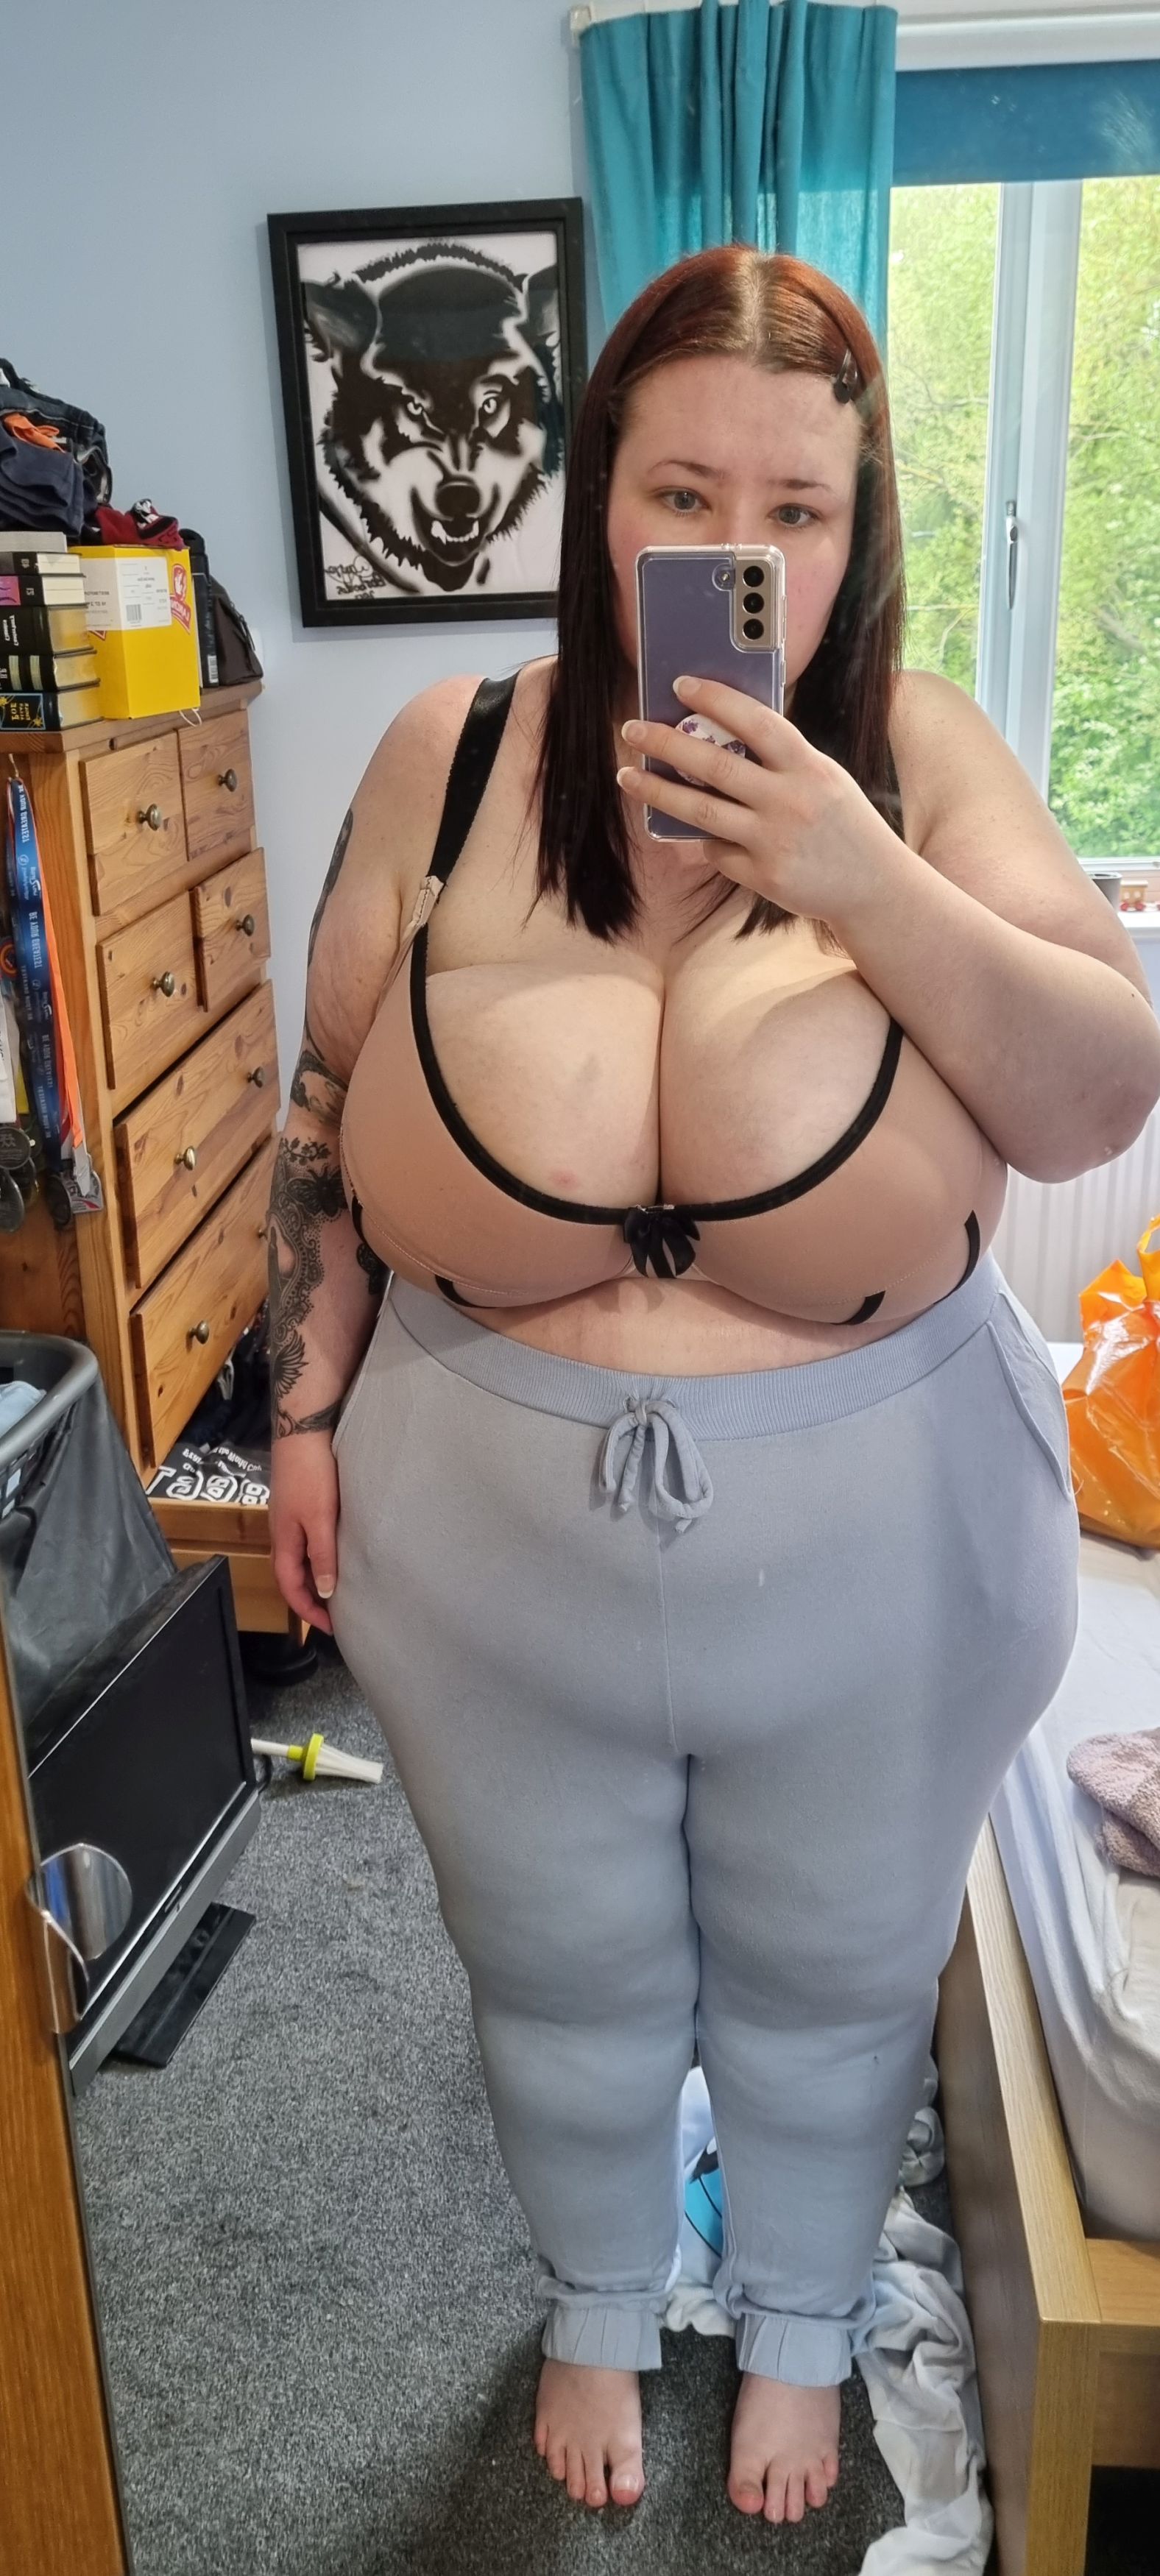 bryan carrick share huge fat tits bbw photos